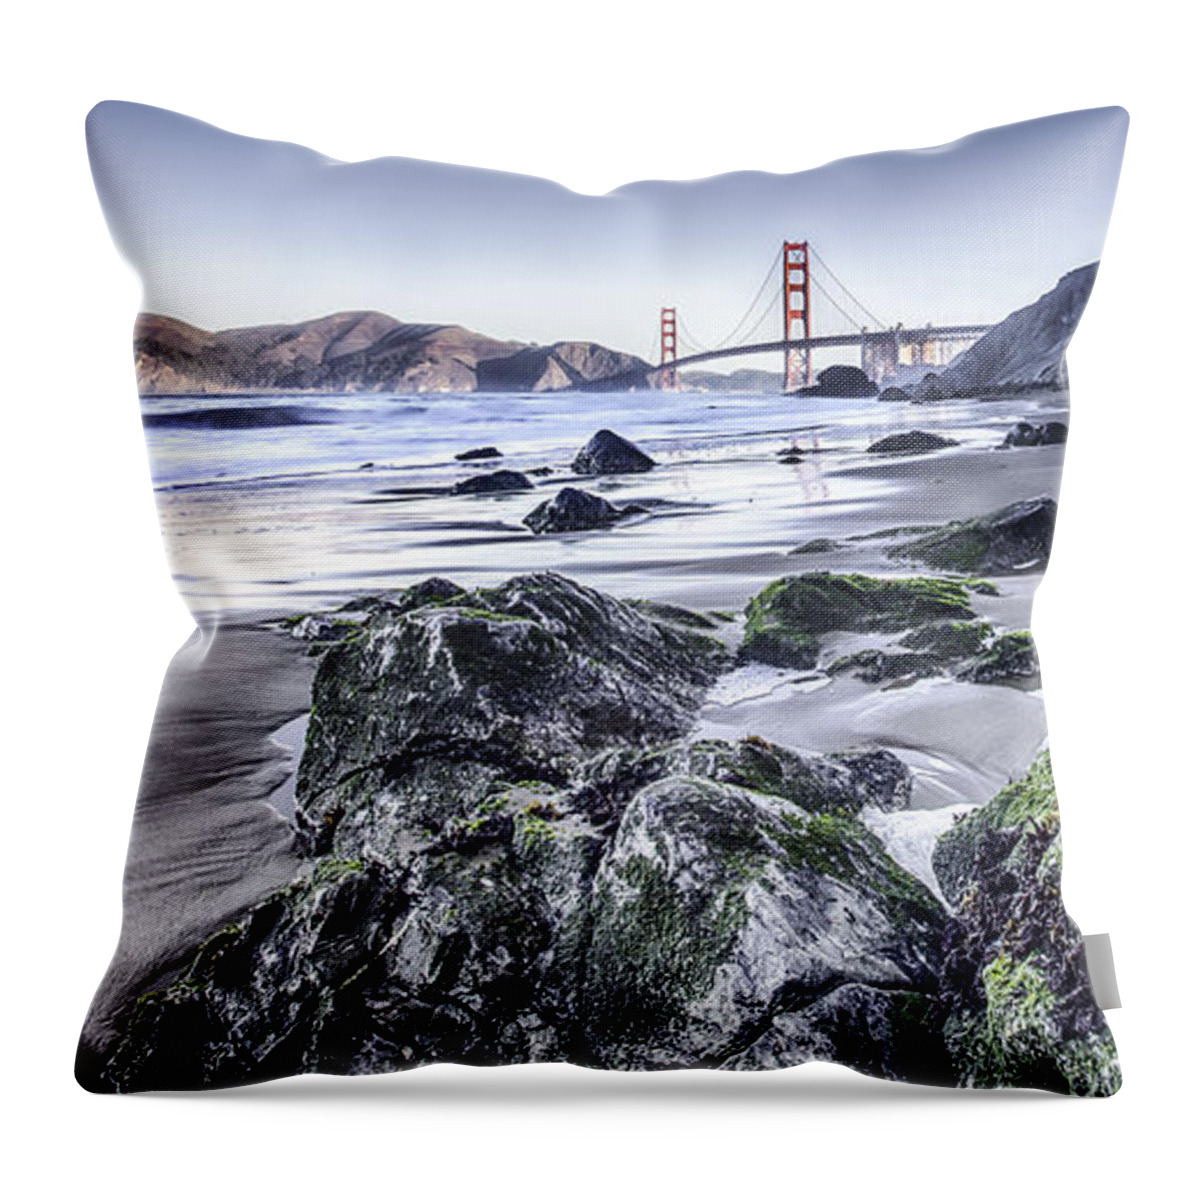 San Francisco Throw Pillow featuring the photograph The Golden Gate Bridge by Chris Cousins